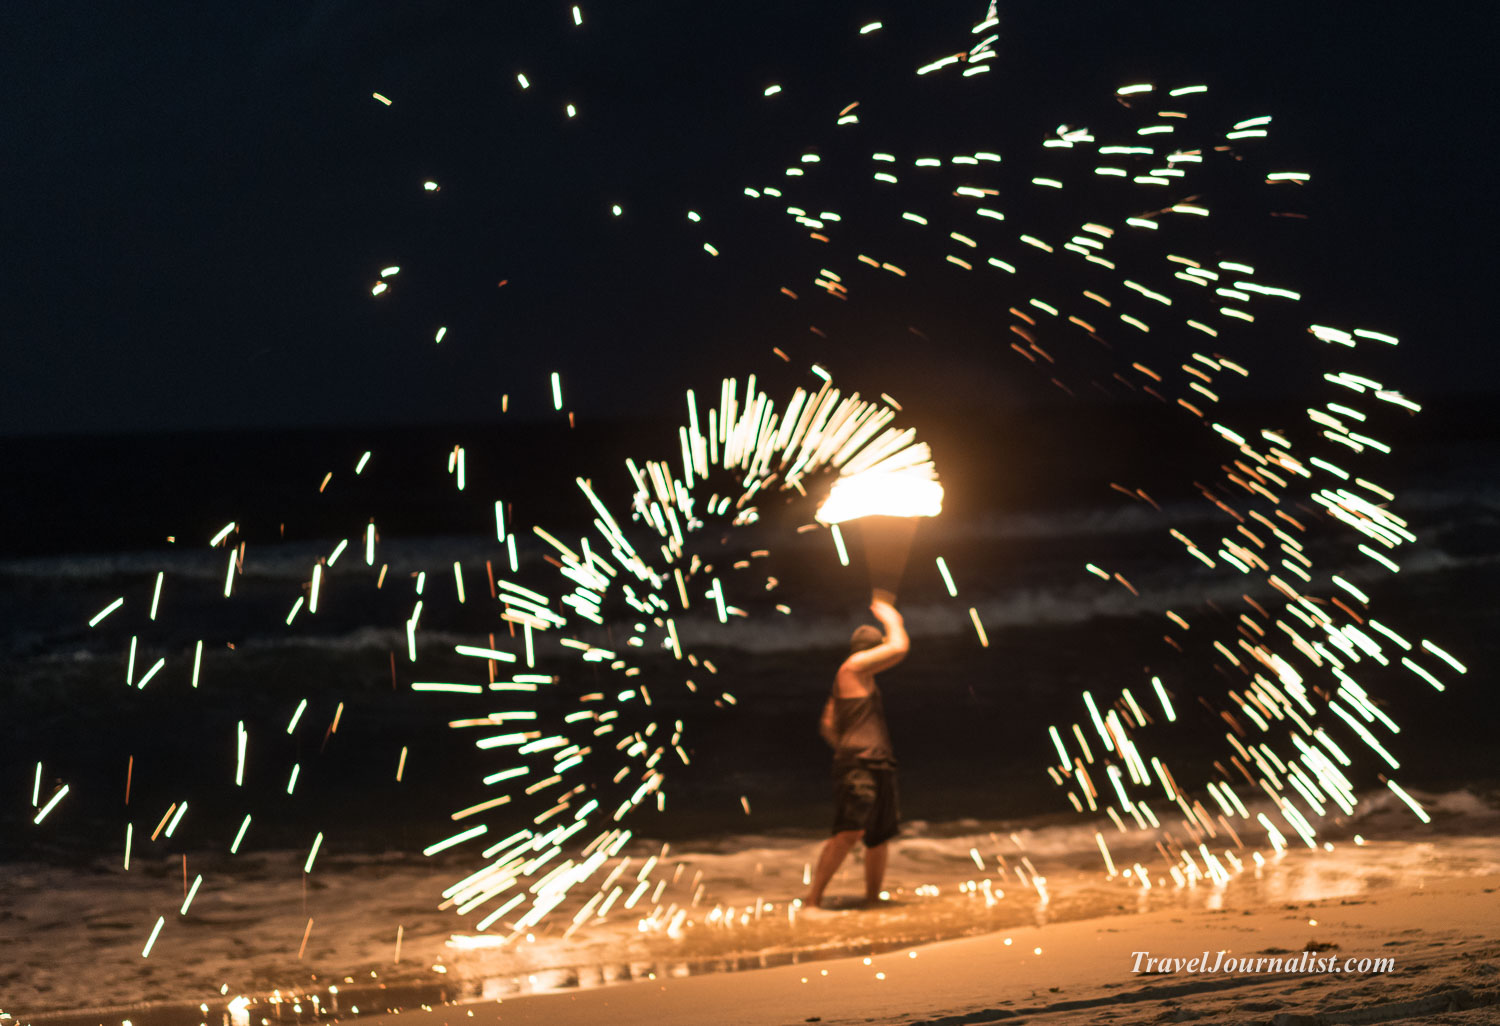 Fire-torch-artist-Juggler-Thailand-Beach-Grand-Centara-Koh-Samui-4